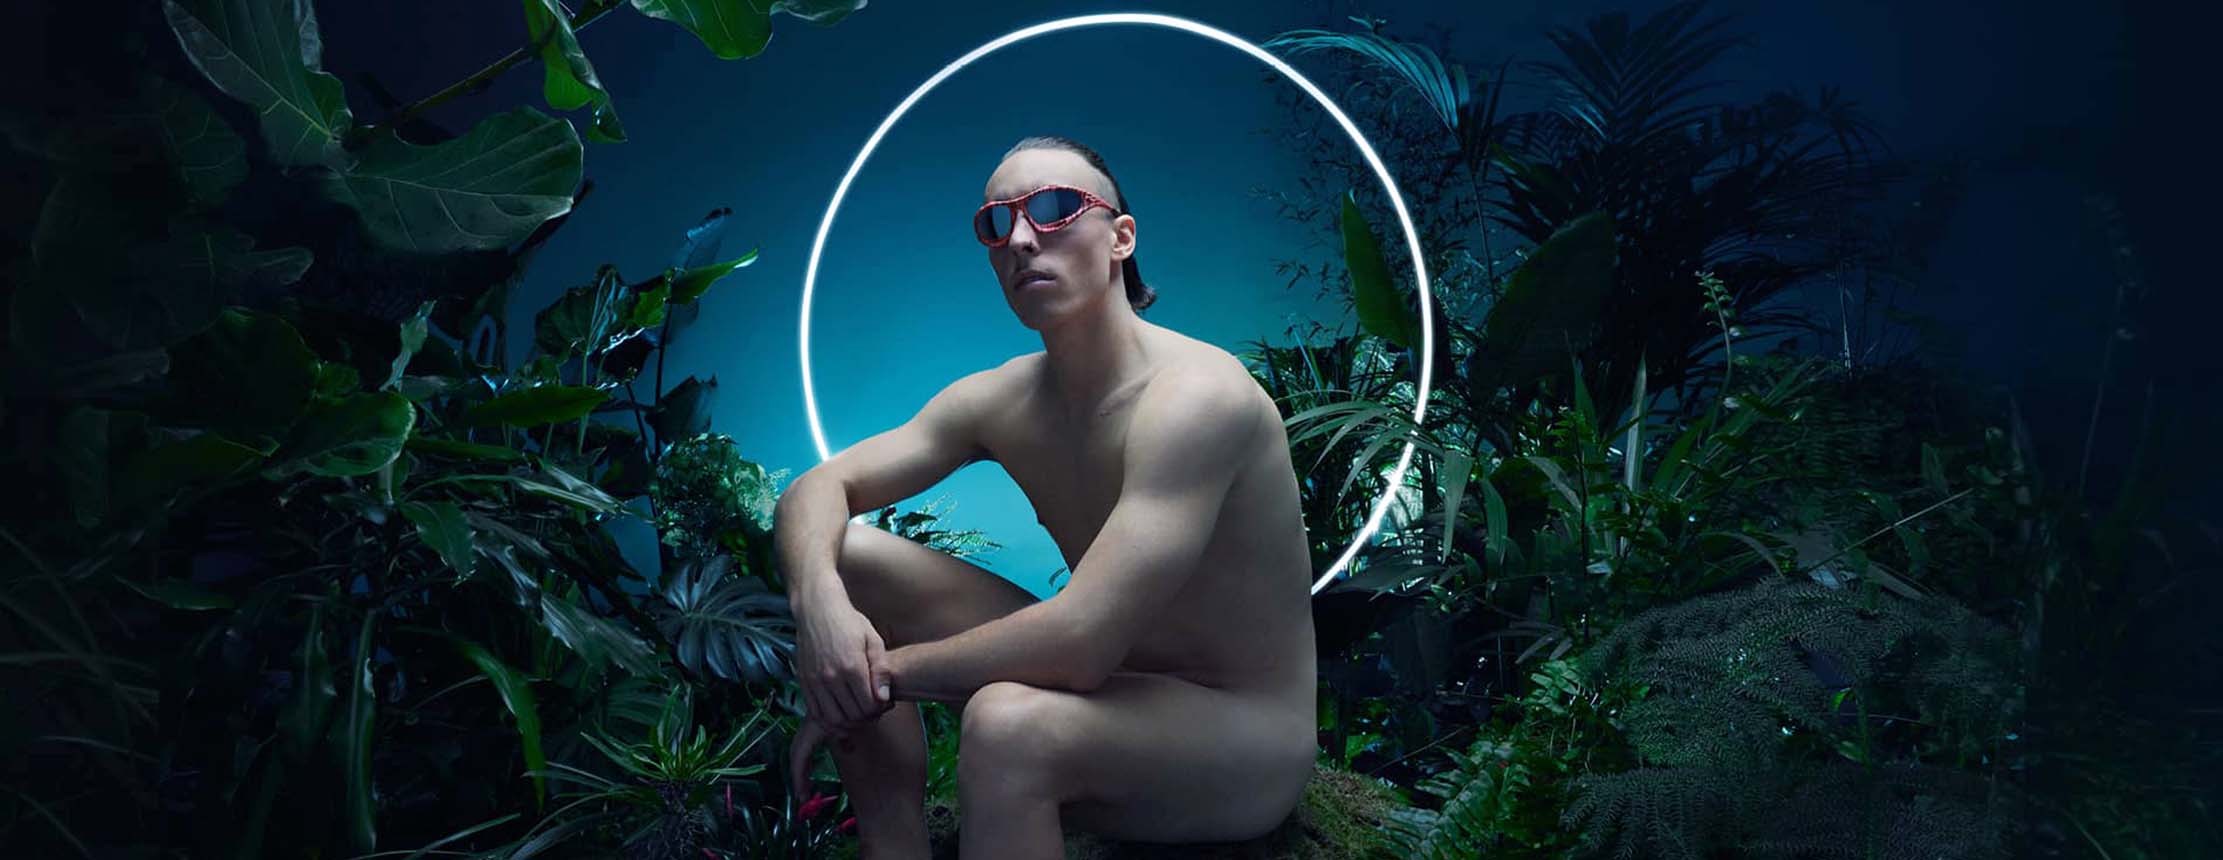 Naked man wearing oakley sunglasses